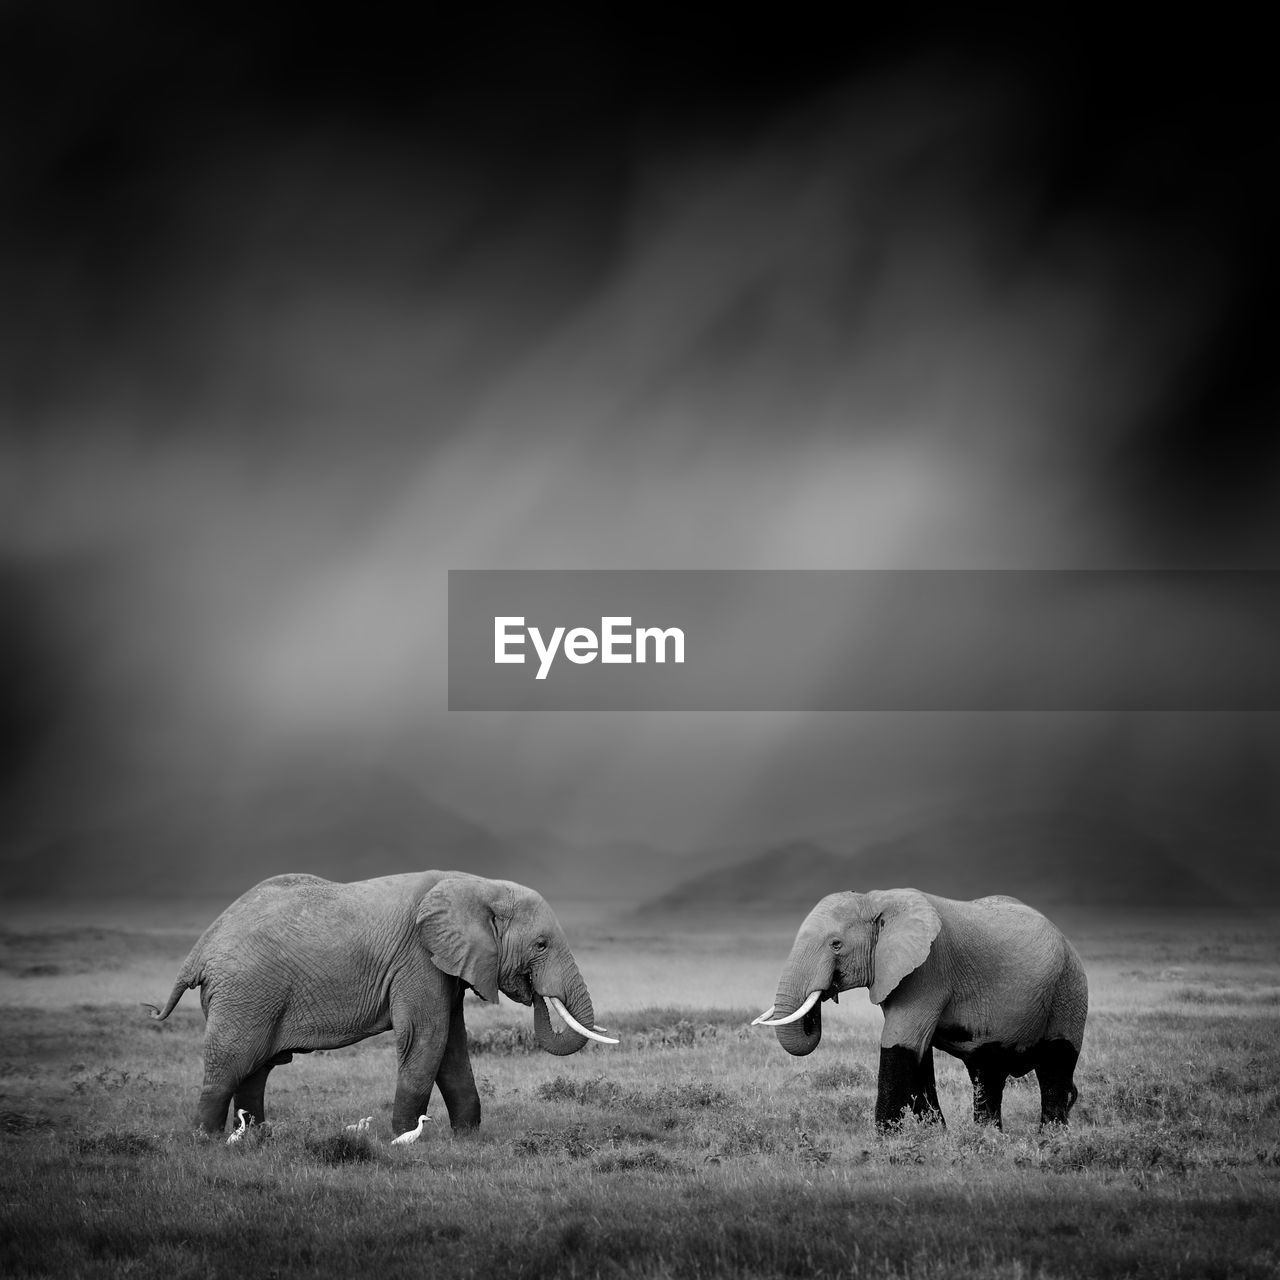 Dramatic black and white image of a elephant on black background